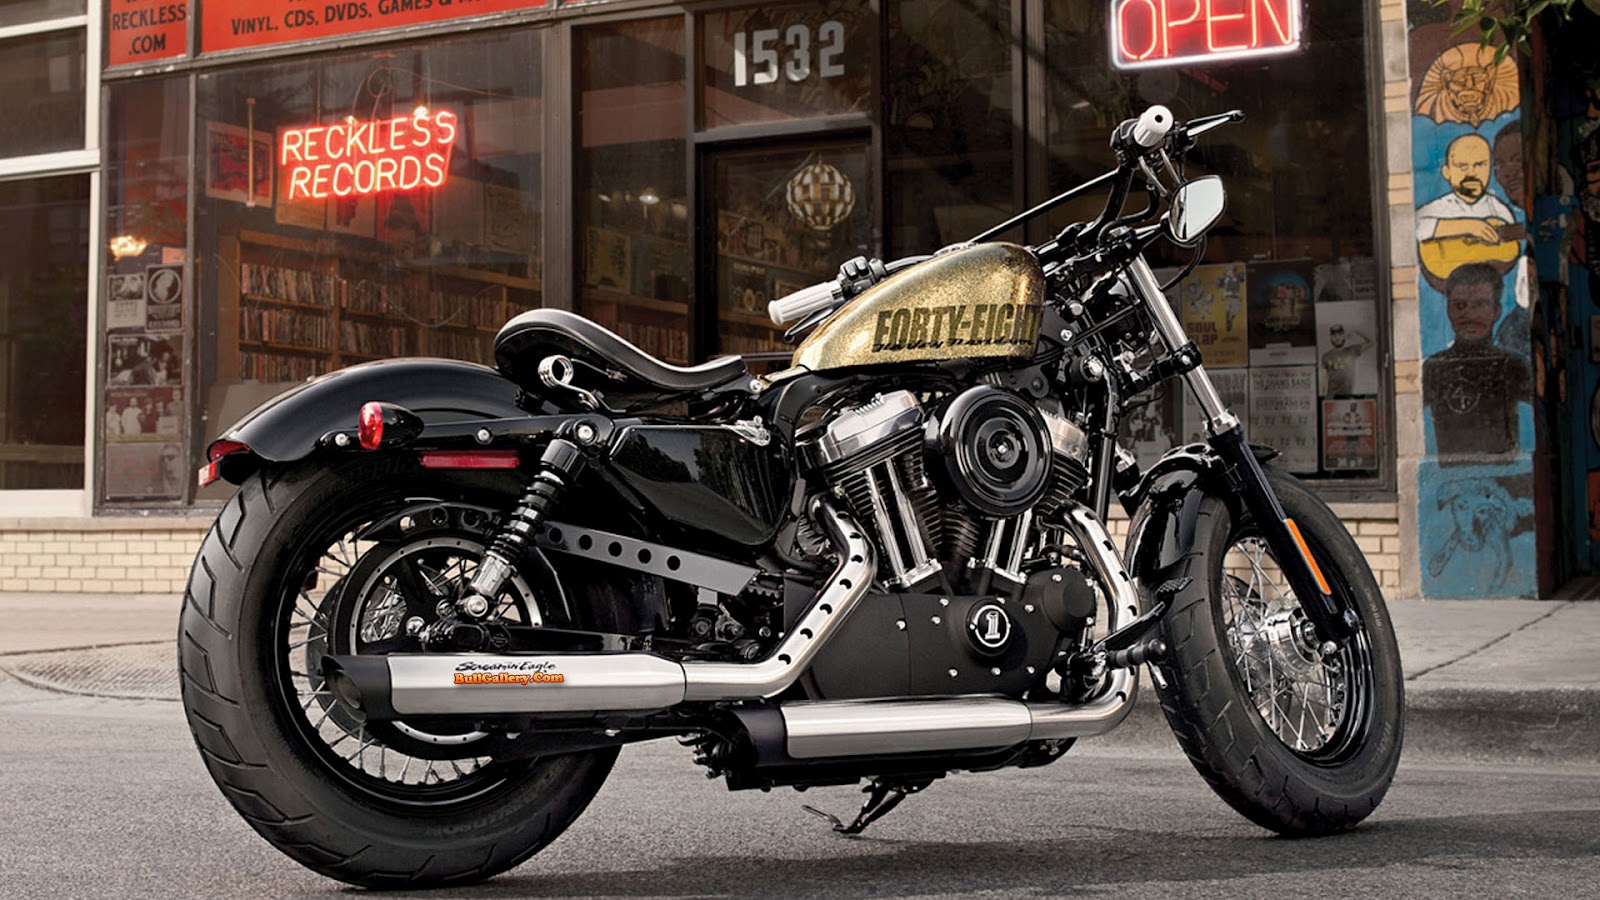 Harley Davidson Bike By Applying The Wallpaper